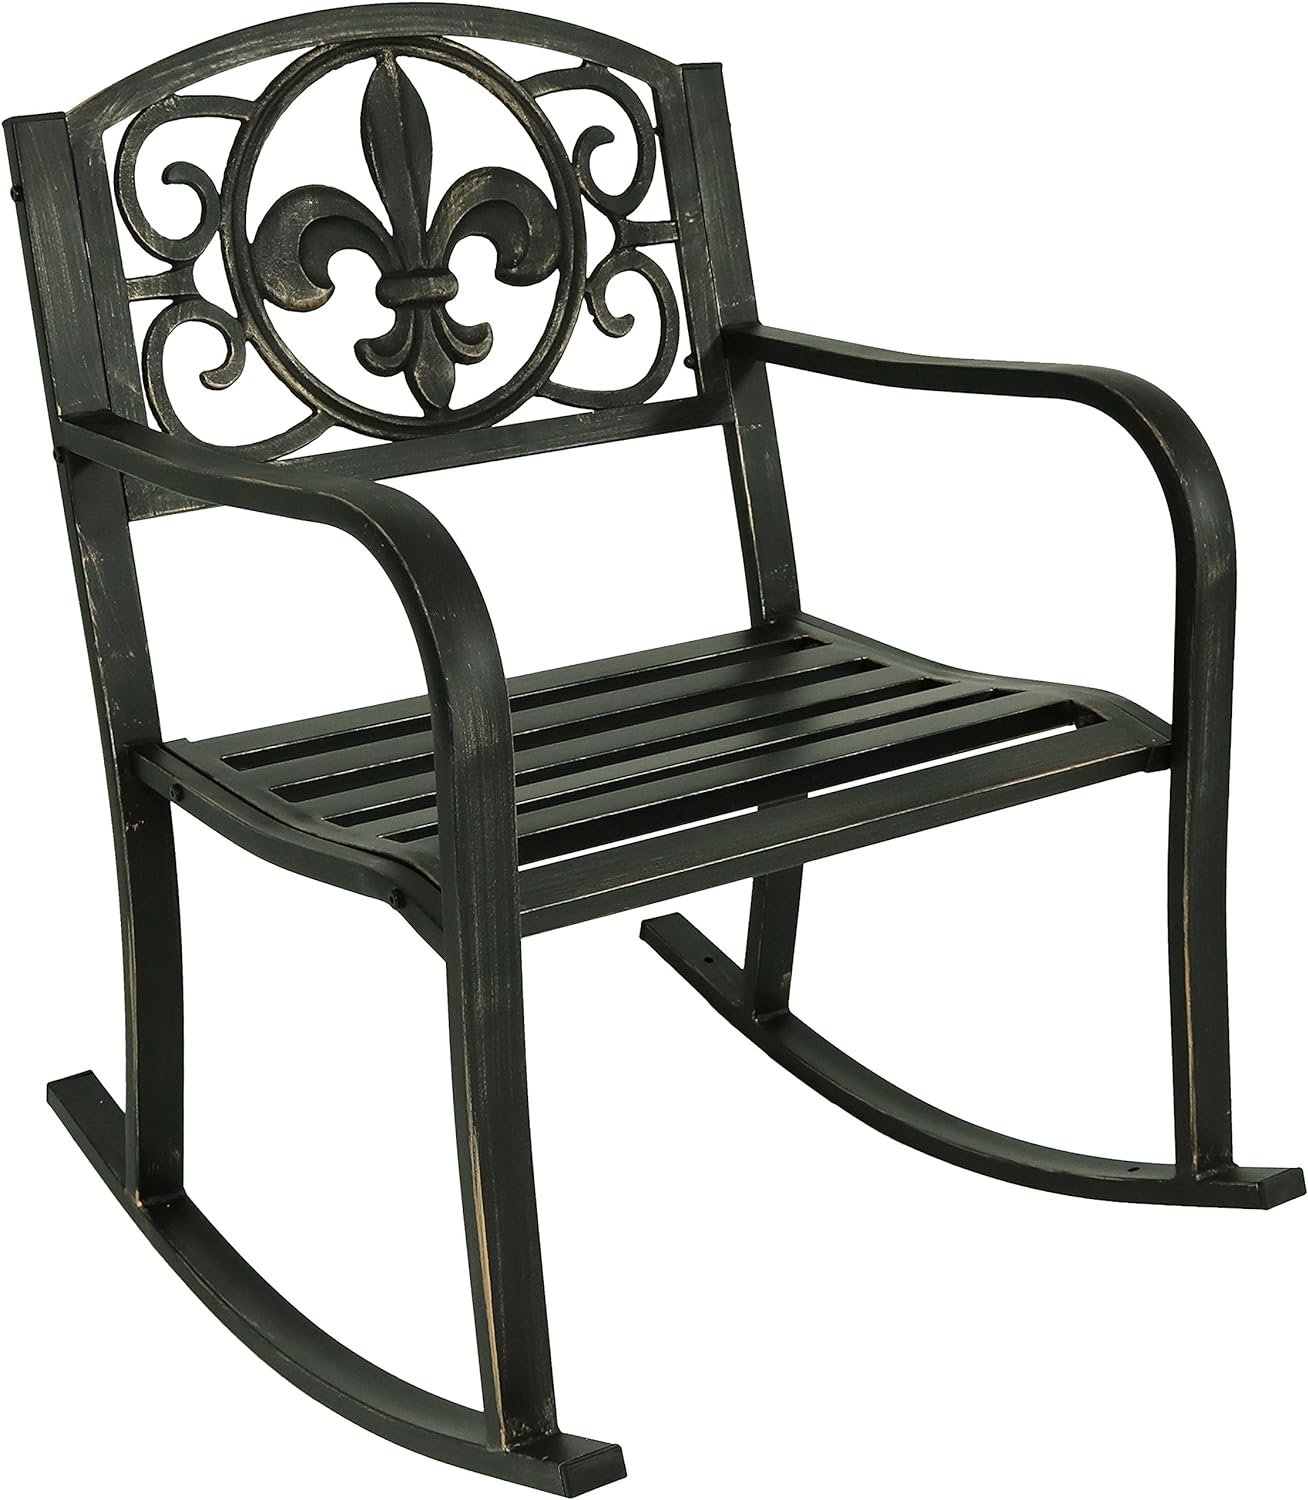 Sunnydaze Fleur-de-Lis Cast Iron and Steel Patio Rocking Chair - 275-Pound Weight Capacity - Black